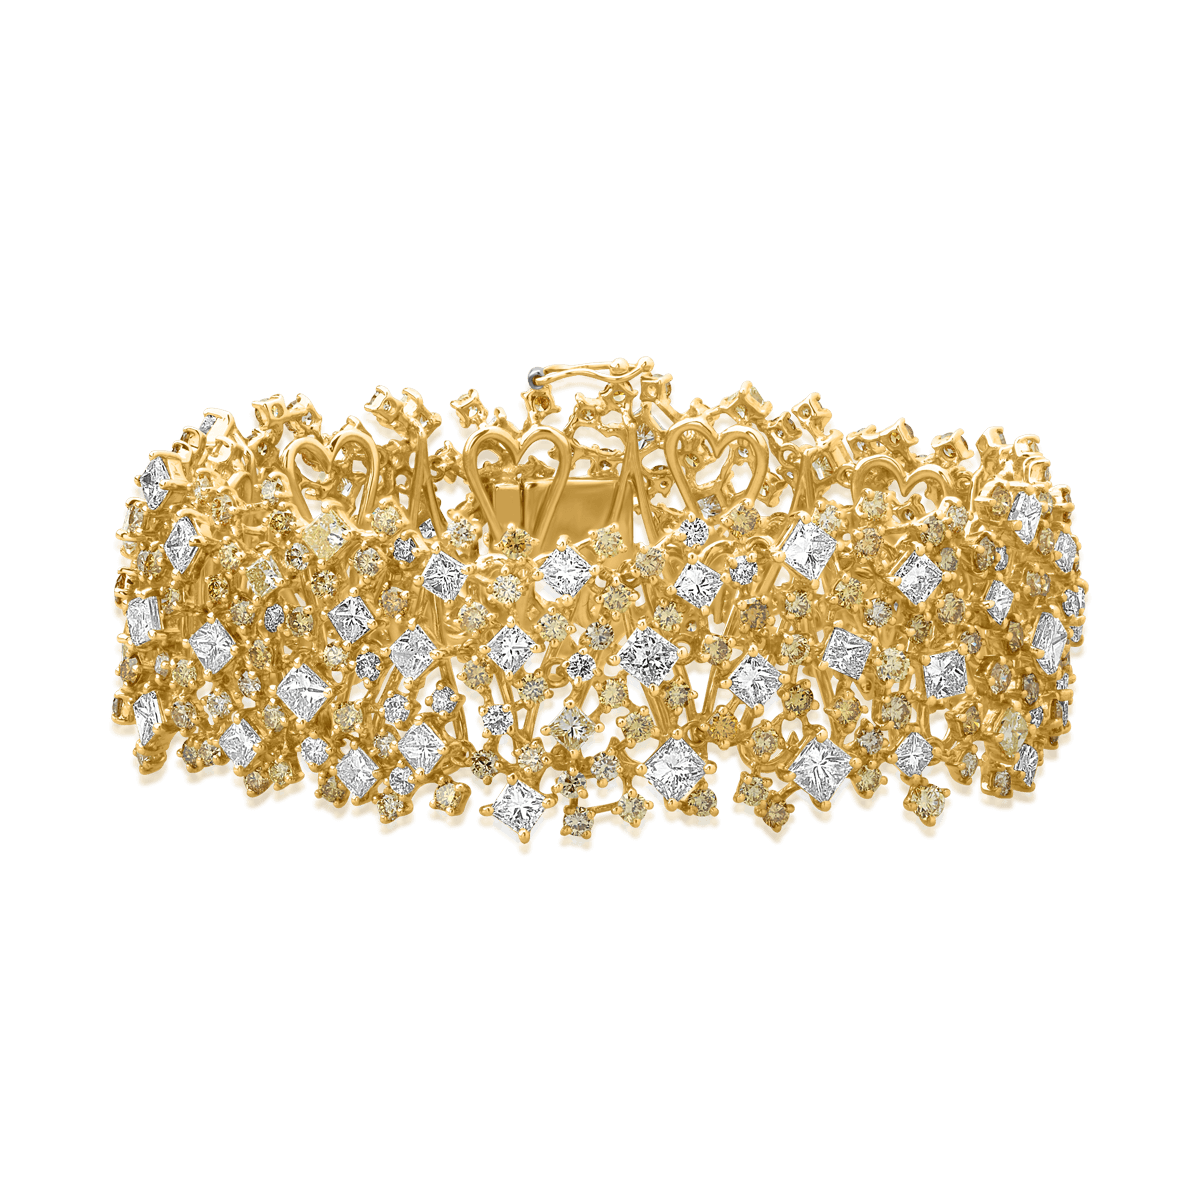 Bratara din aur galben de 18K cu diamante transparente de 16.21ct si diamante colorate de 3.8ct 16.21ct